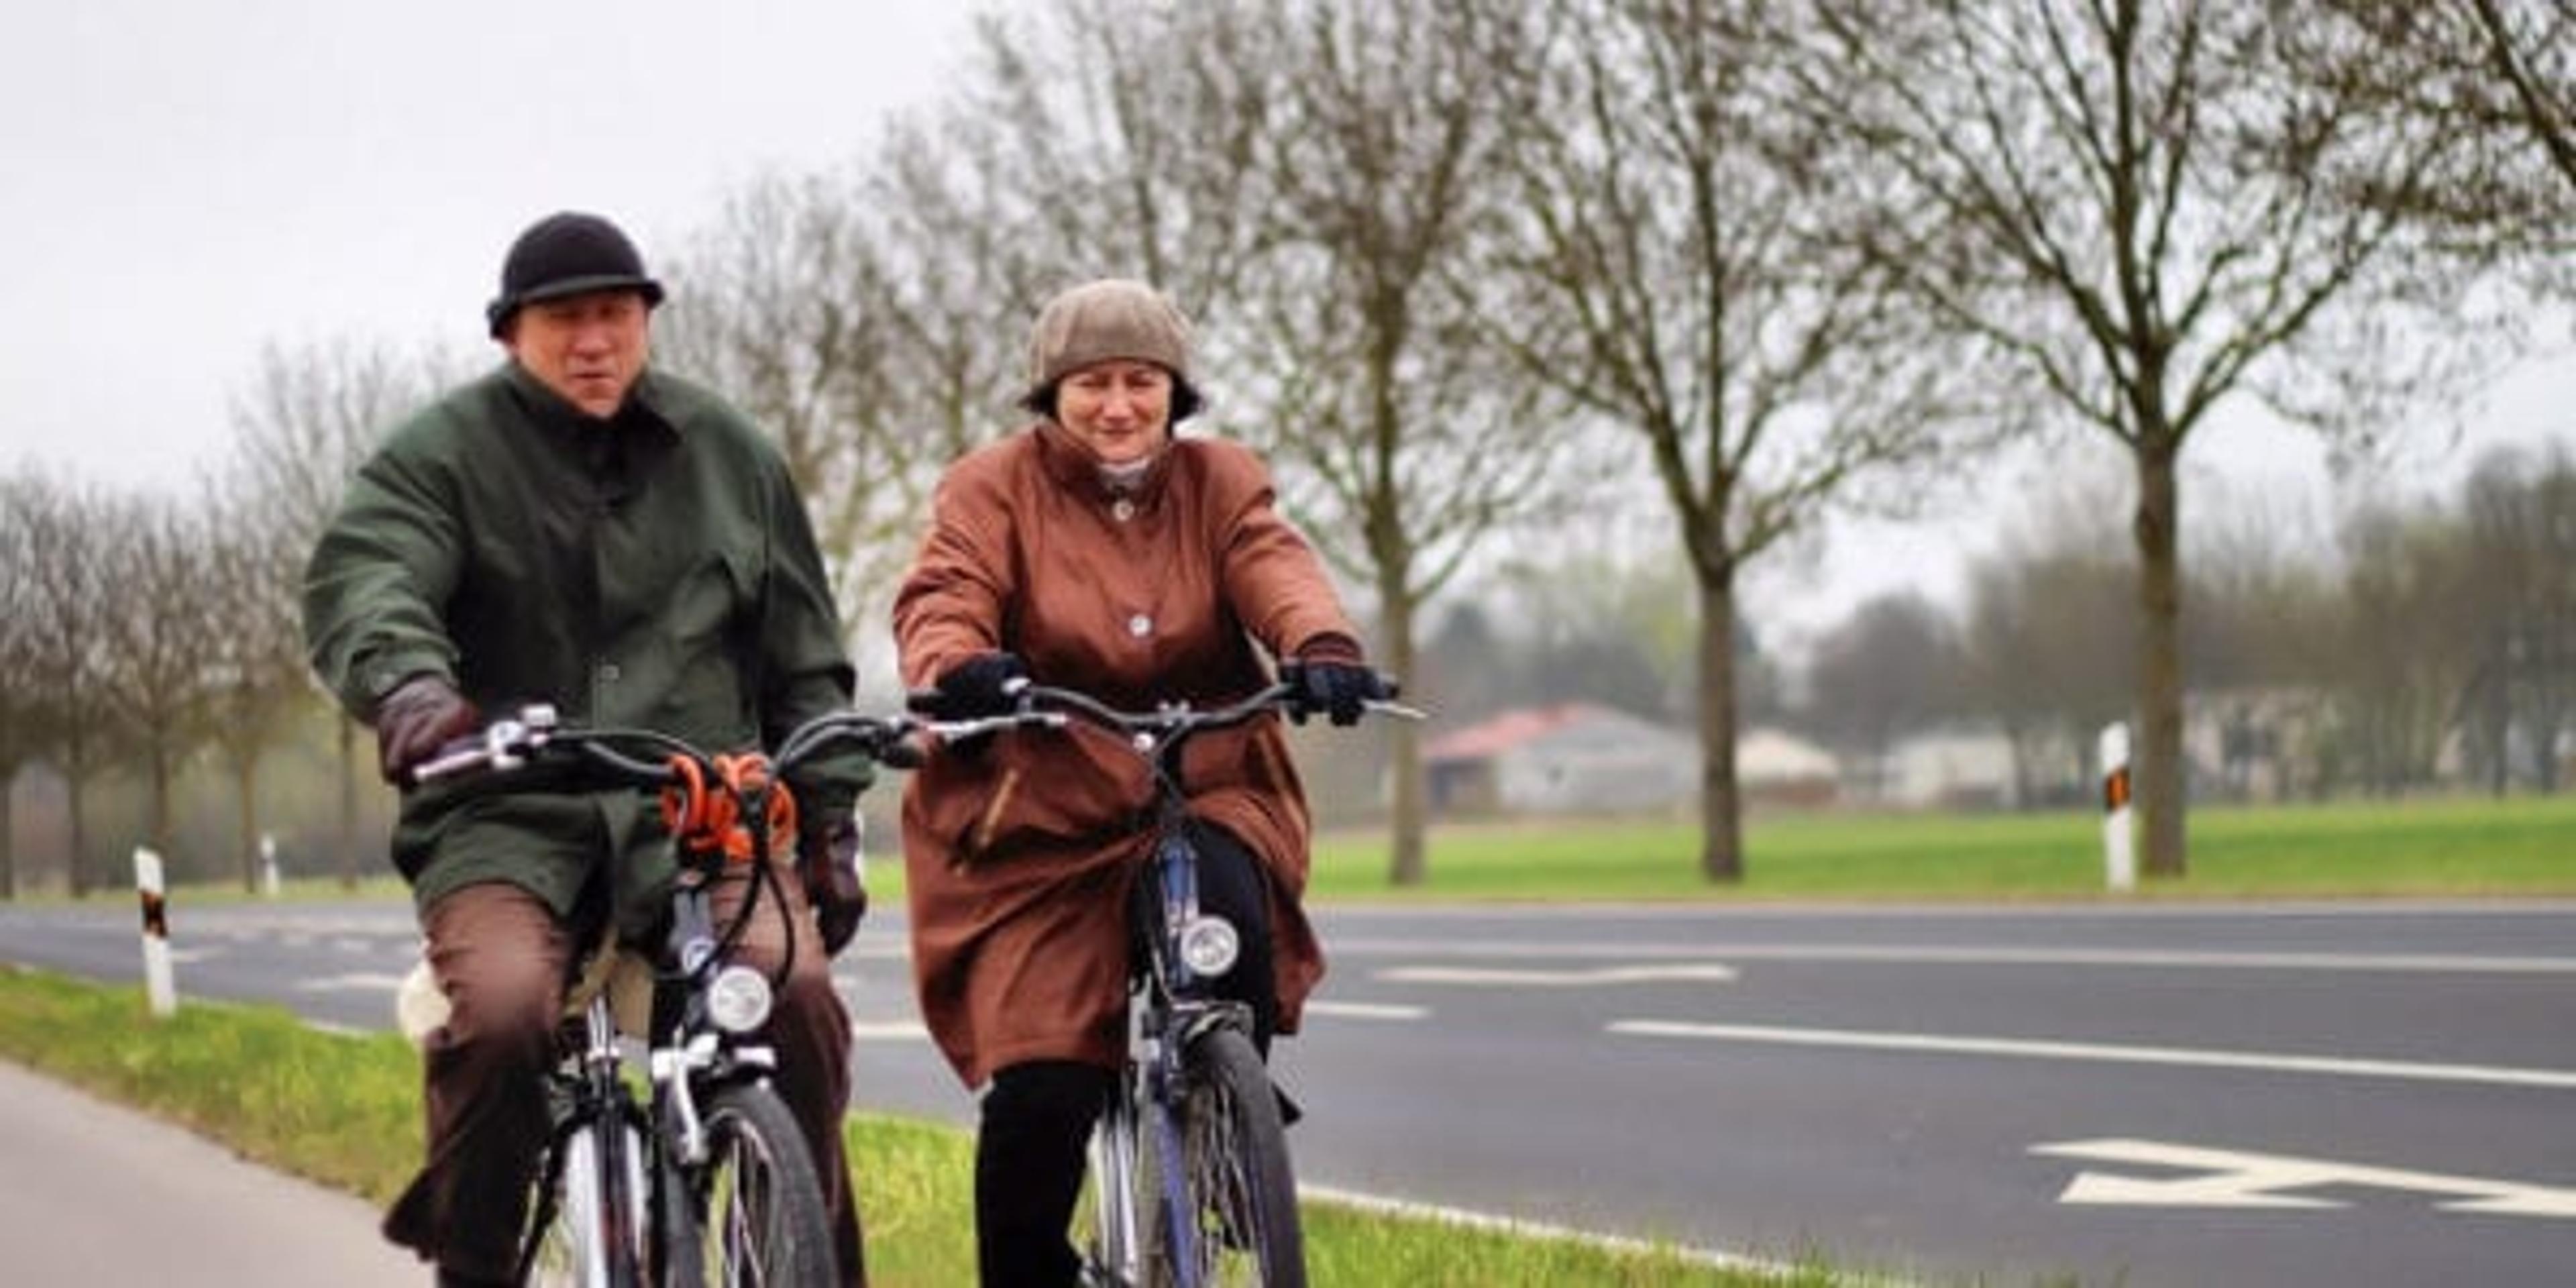 Couple Biking Together